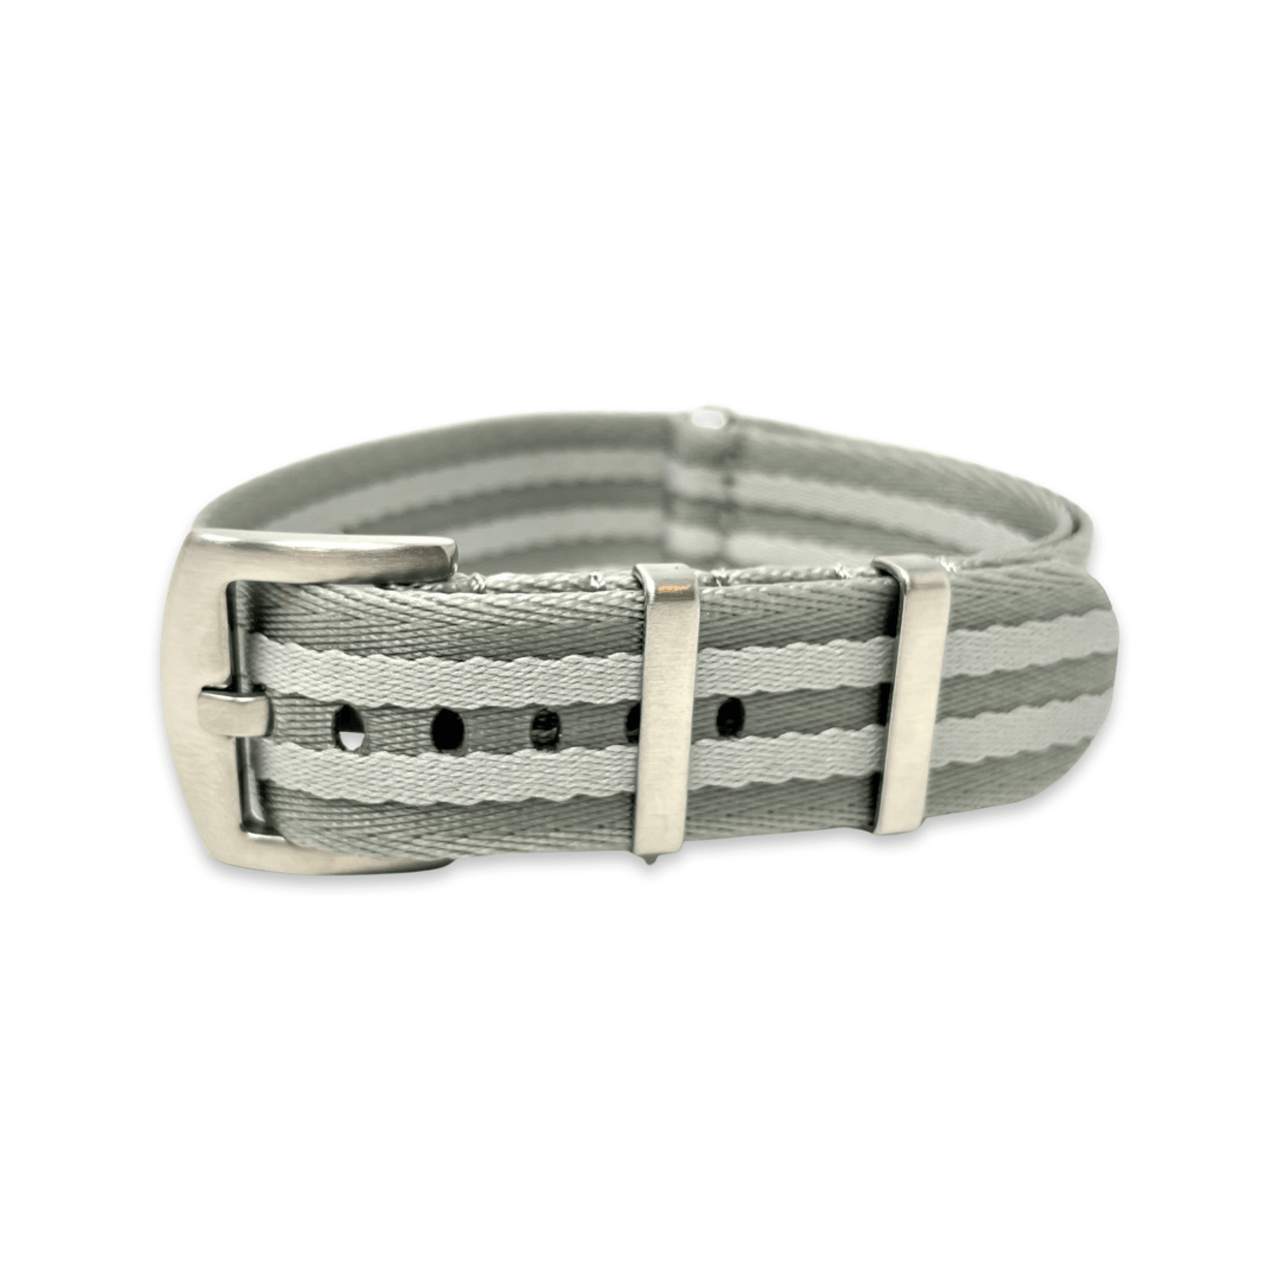 Seatbelt Military Style Strap - Grey Silver Stripe